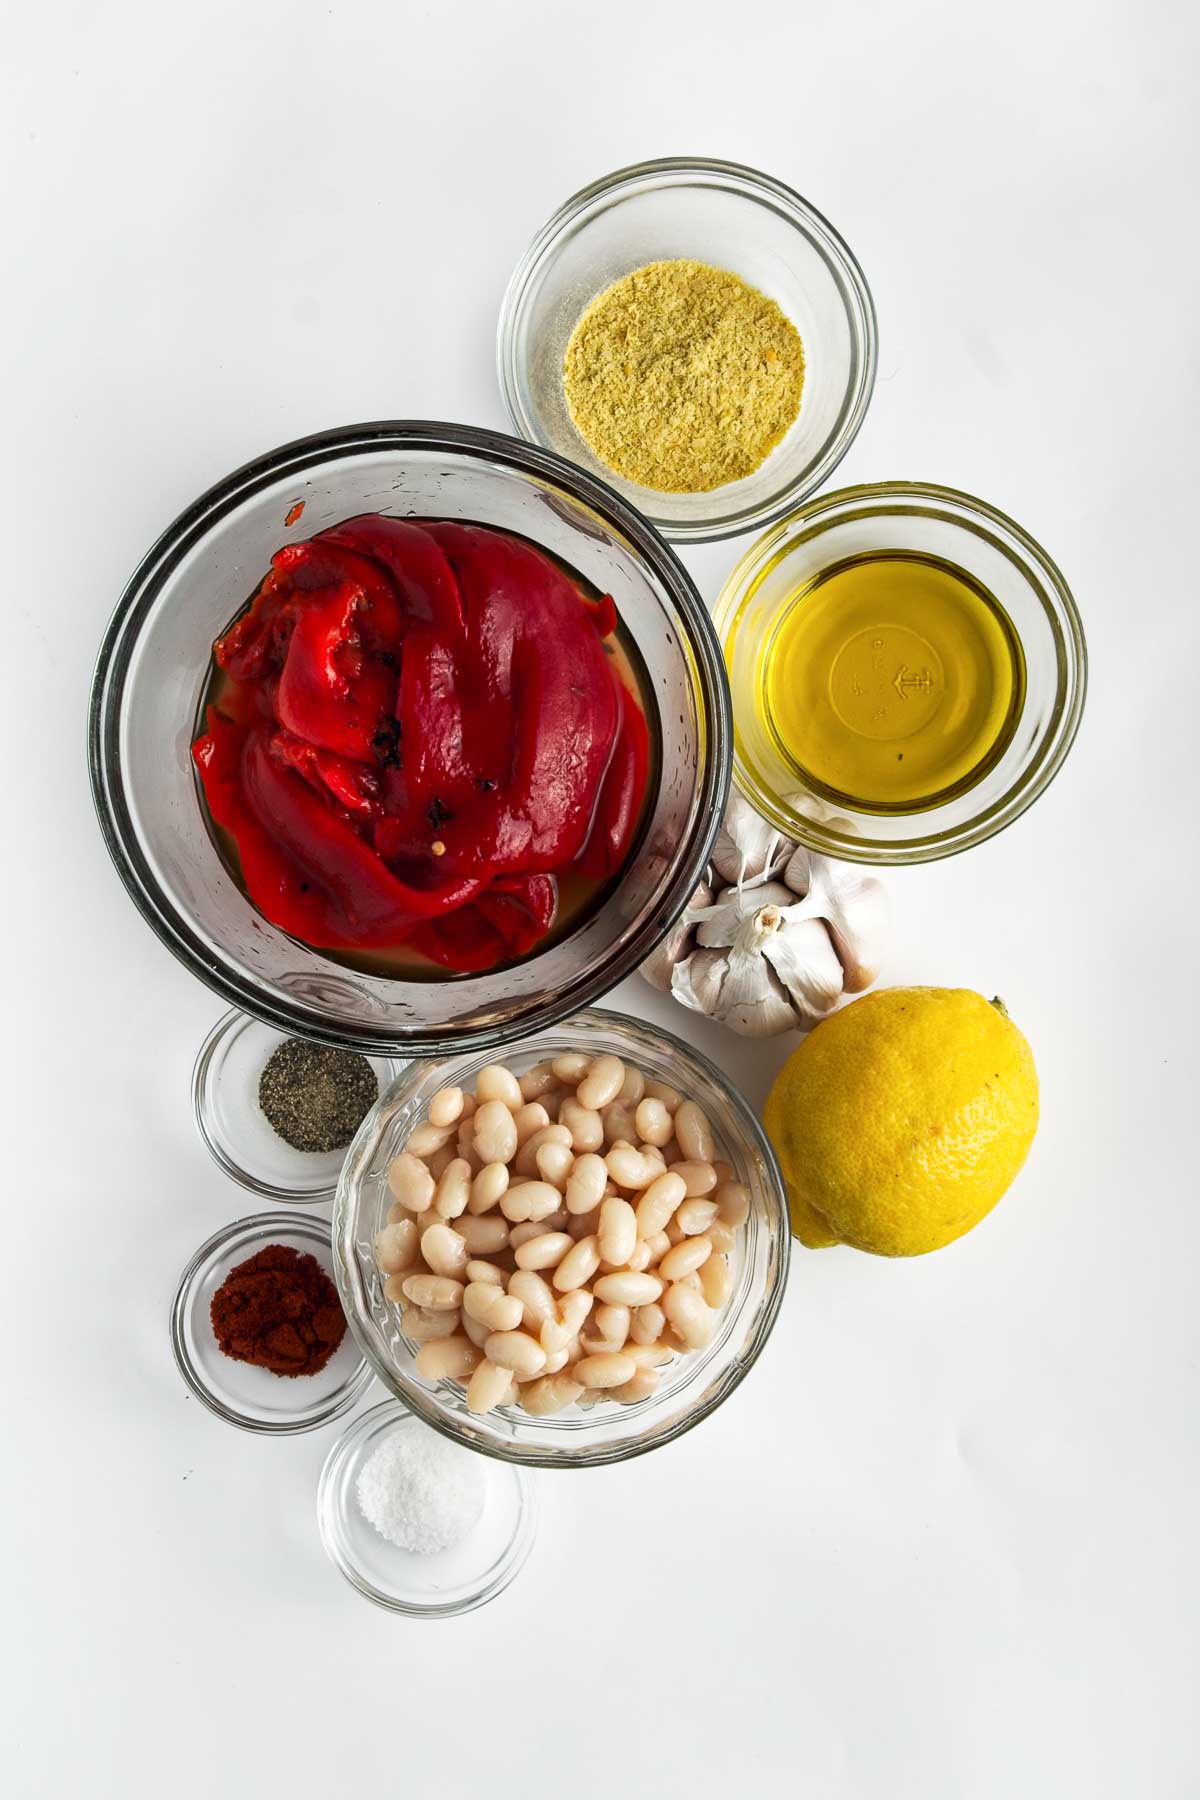 Ingredients to make roasted red pepper dip